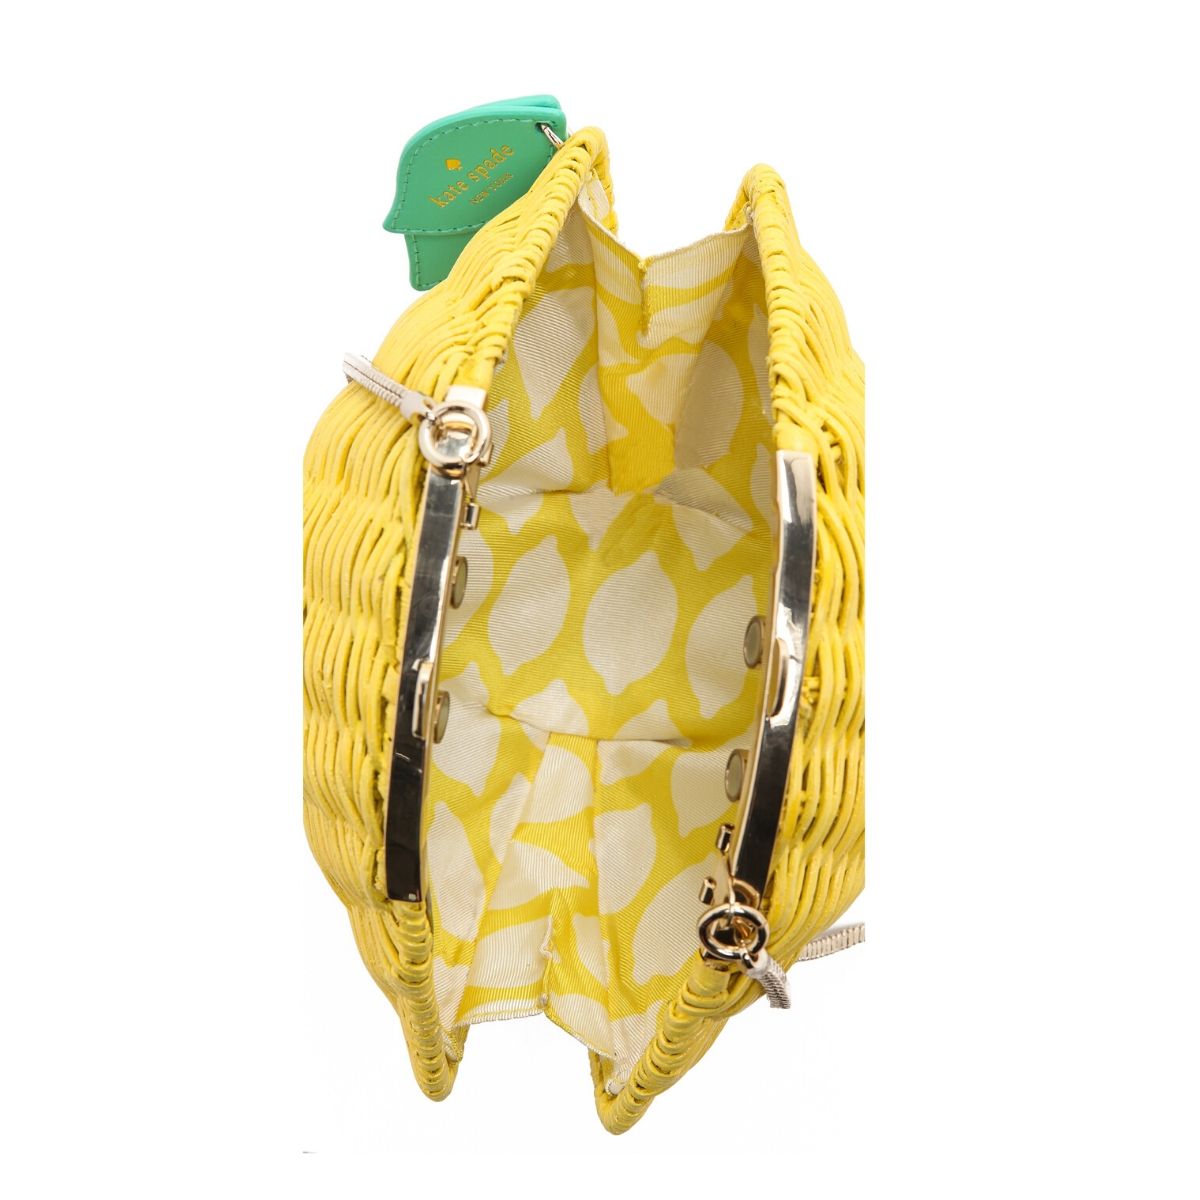 Kate Spade Medium Chain Saddle Bag Limelight (Yellow)